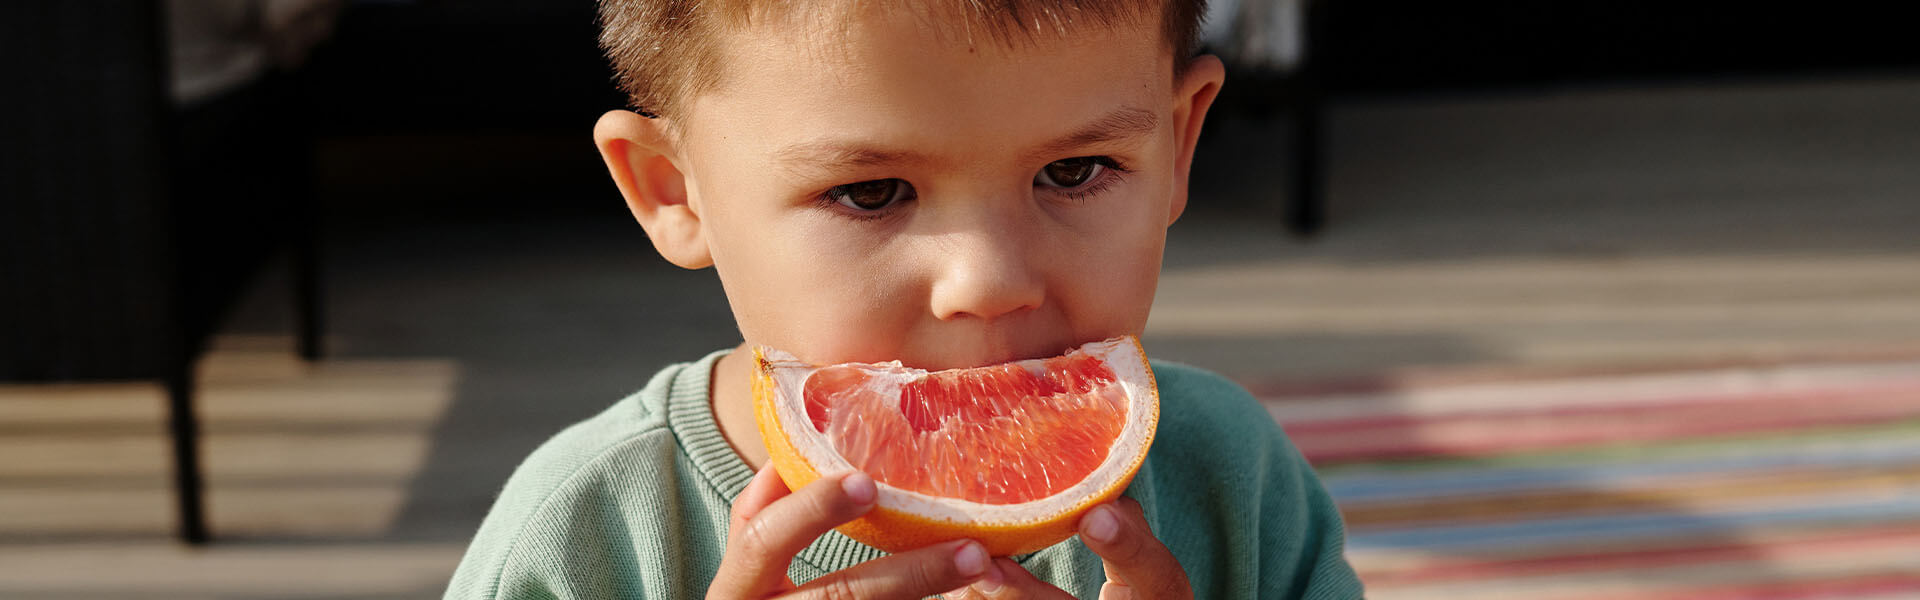 A toddler eating some fruit